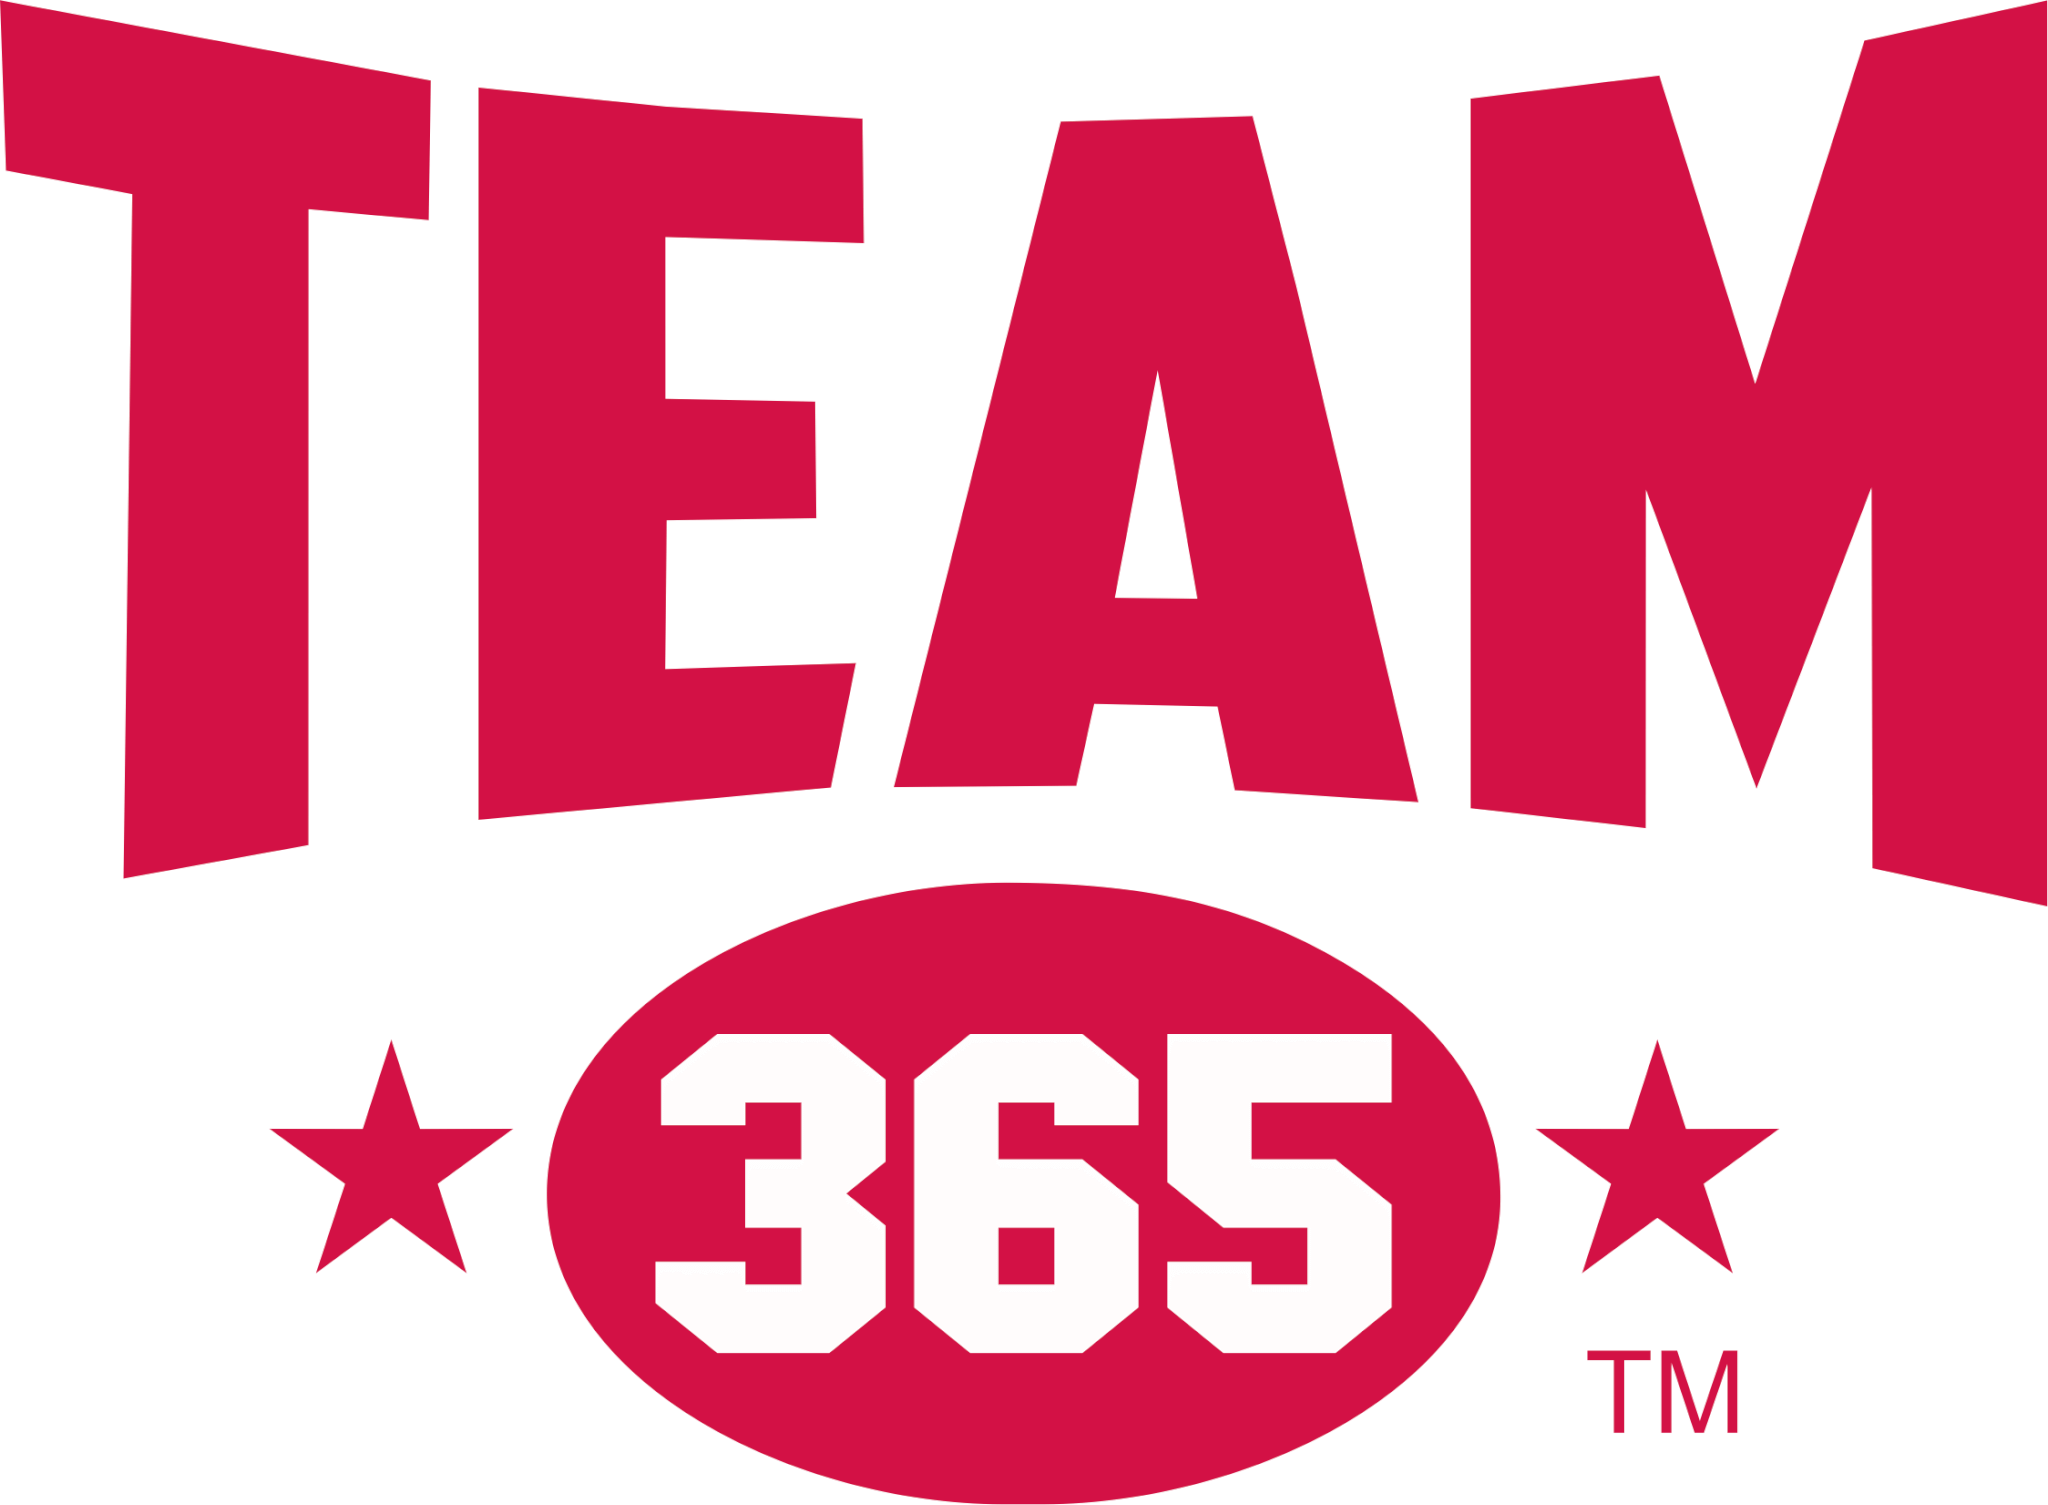 team365